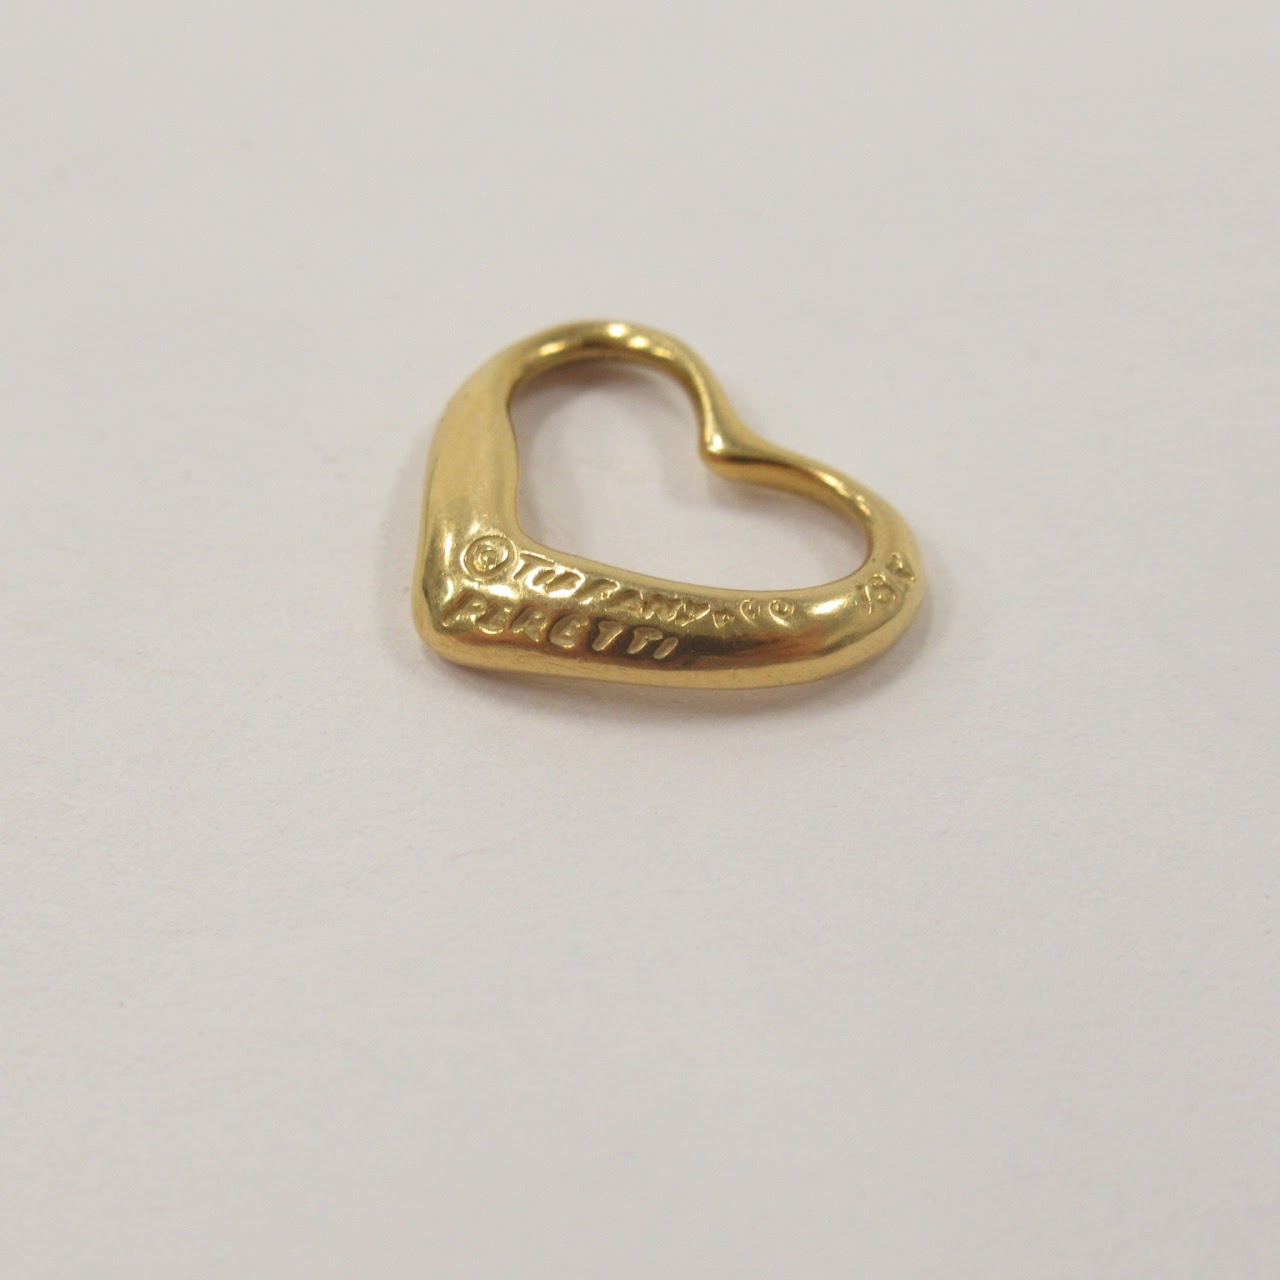 Tiffany & Co. X Elsa Peretti 18K Gold Open Heart Pendant